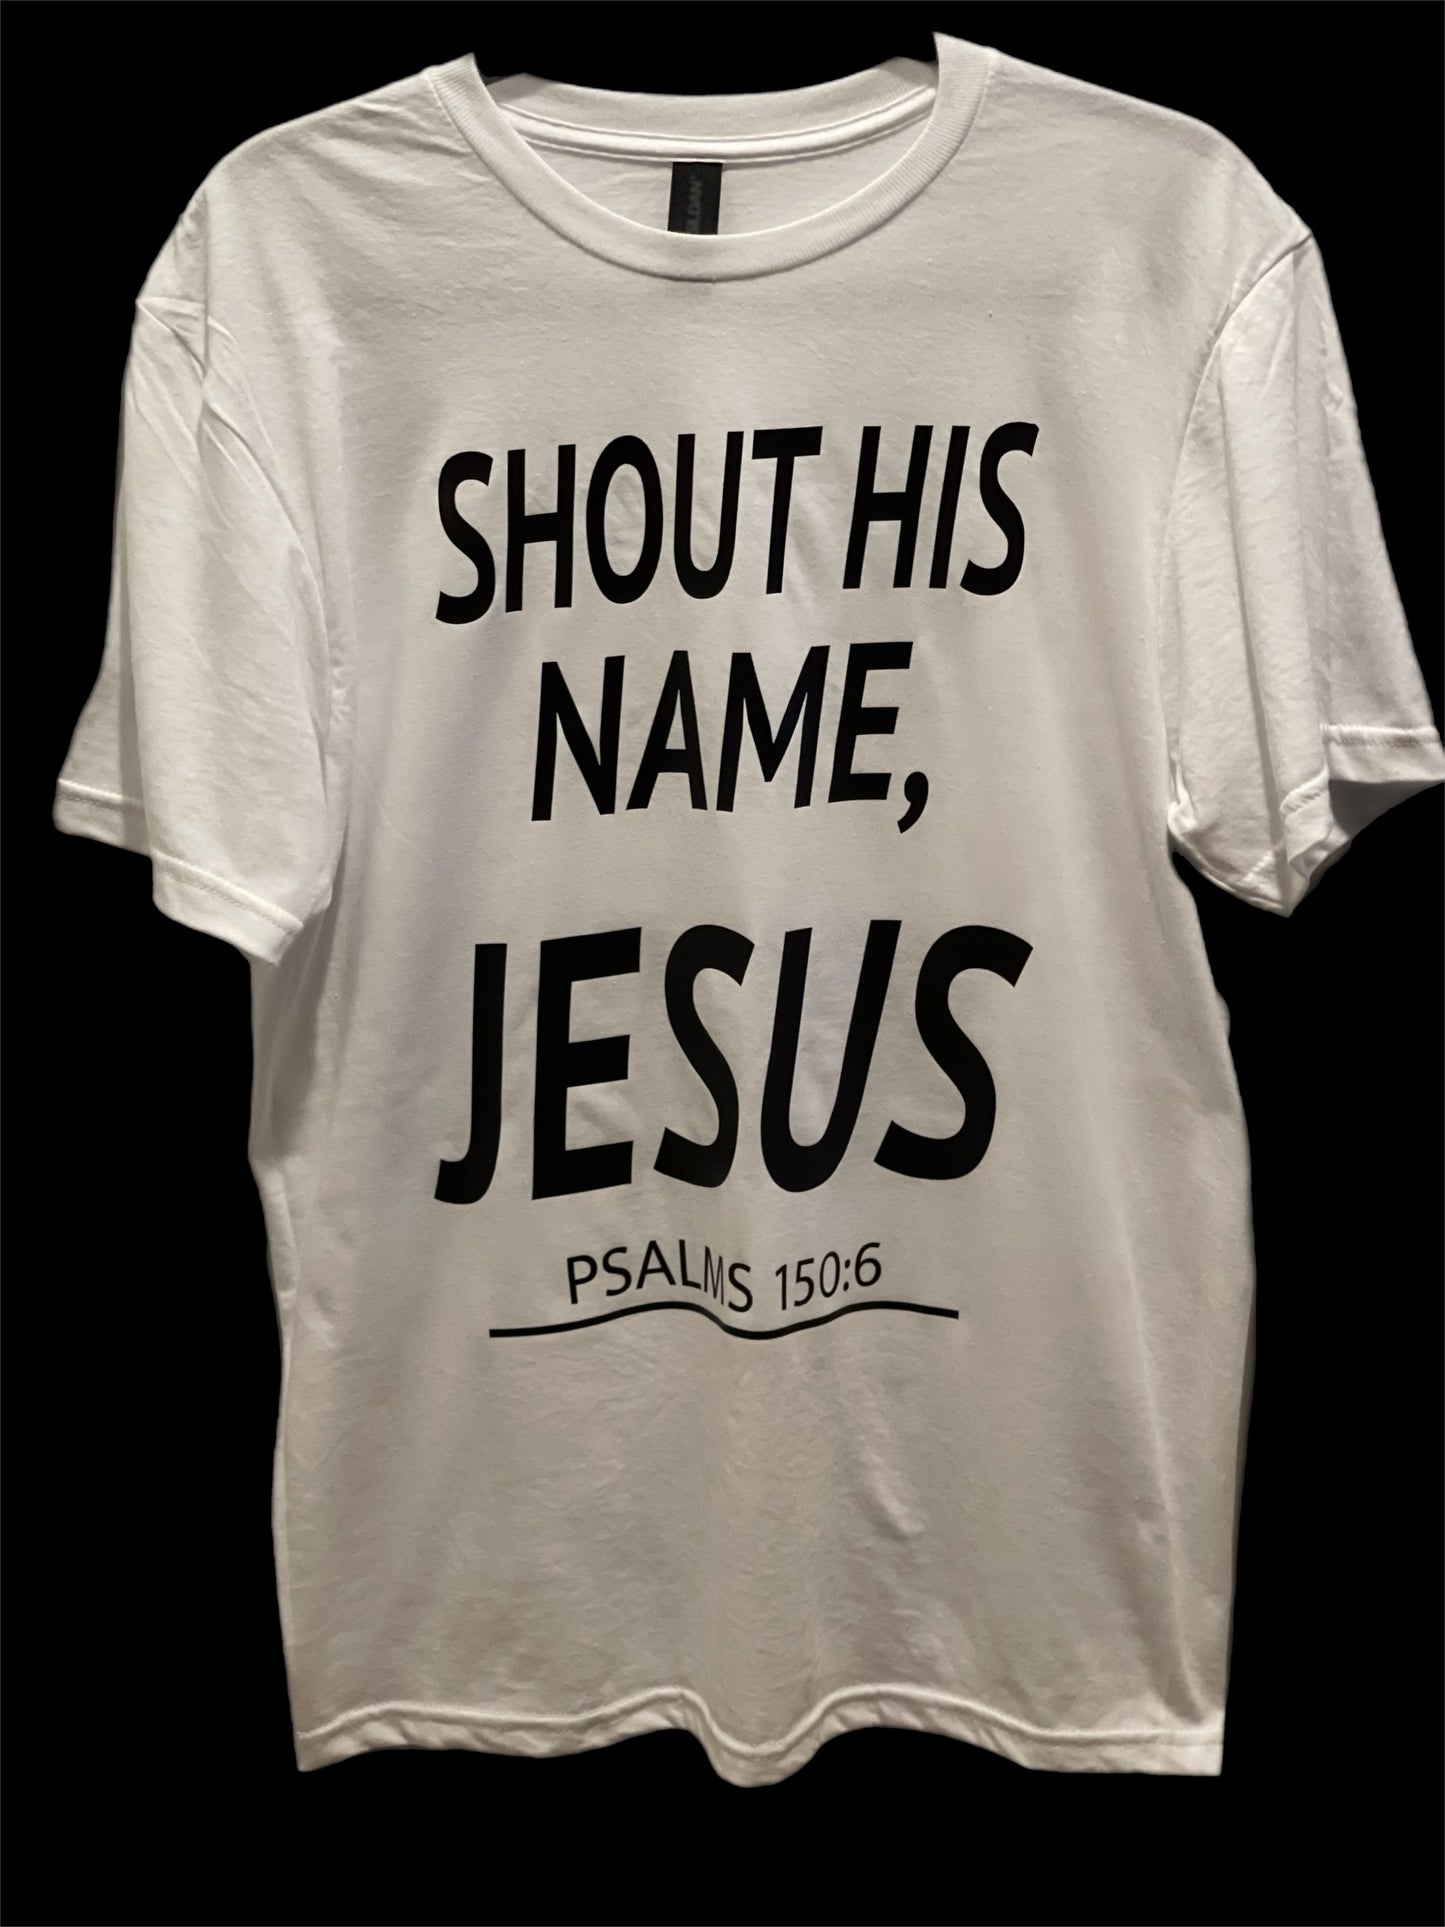 Shout His Name, Jesus!